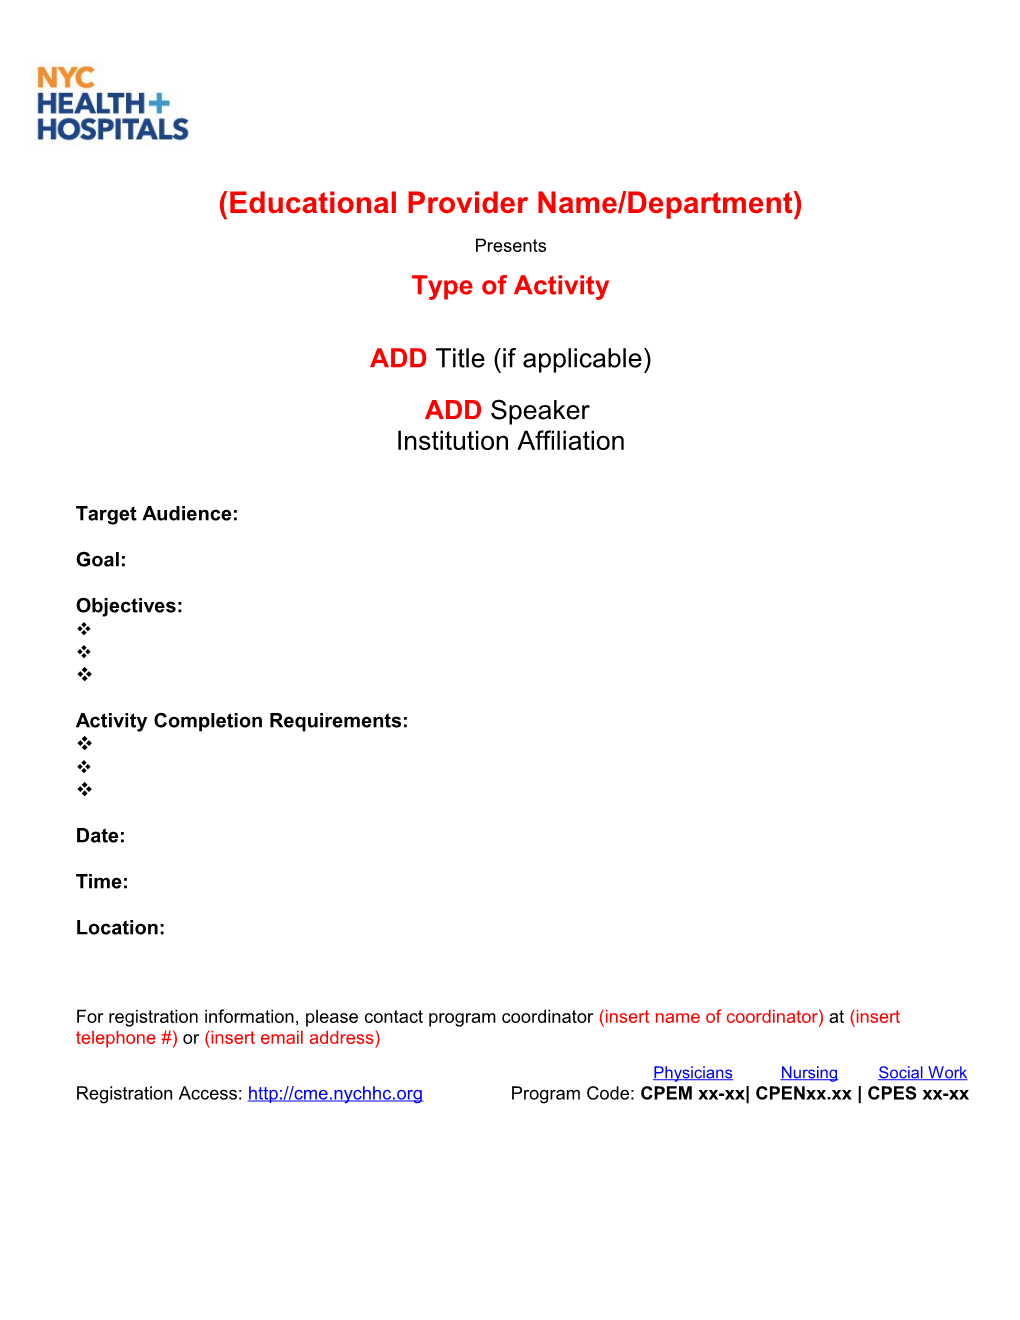 Educational Provider Name/Department